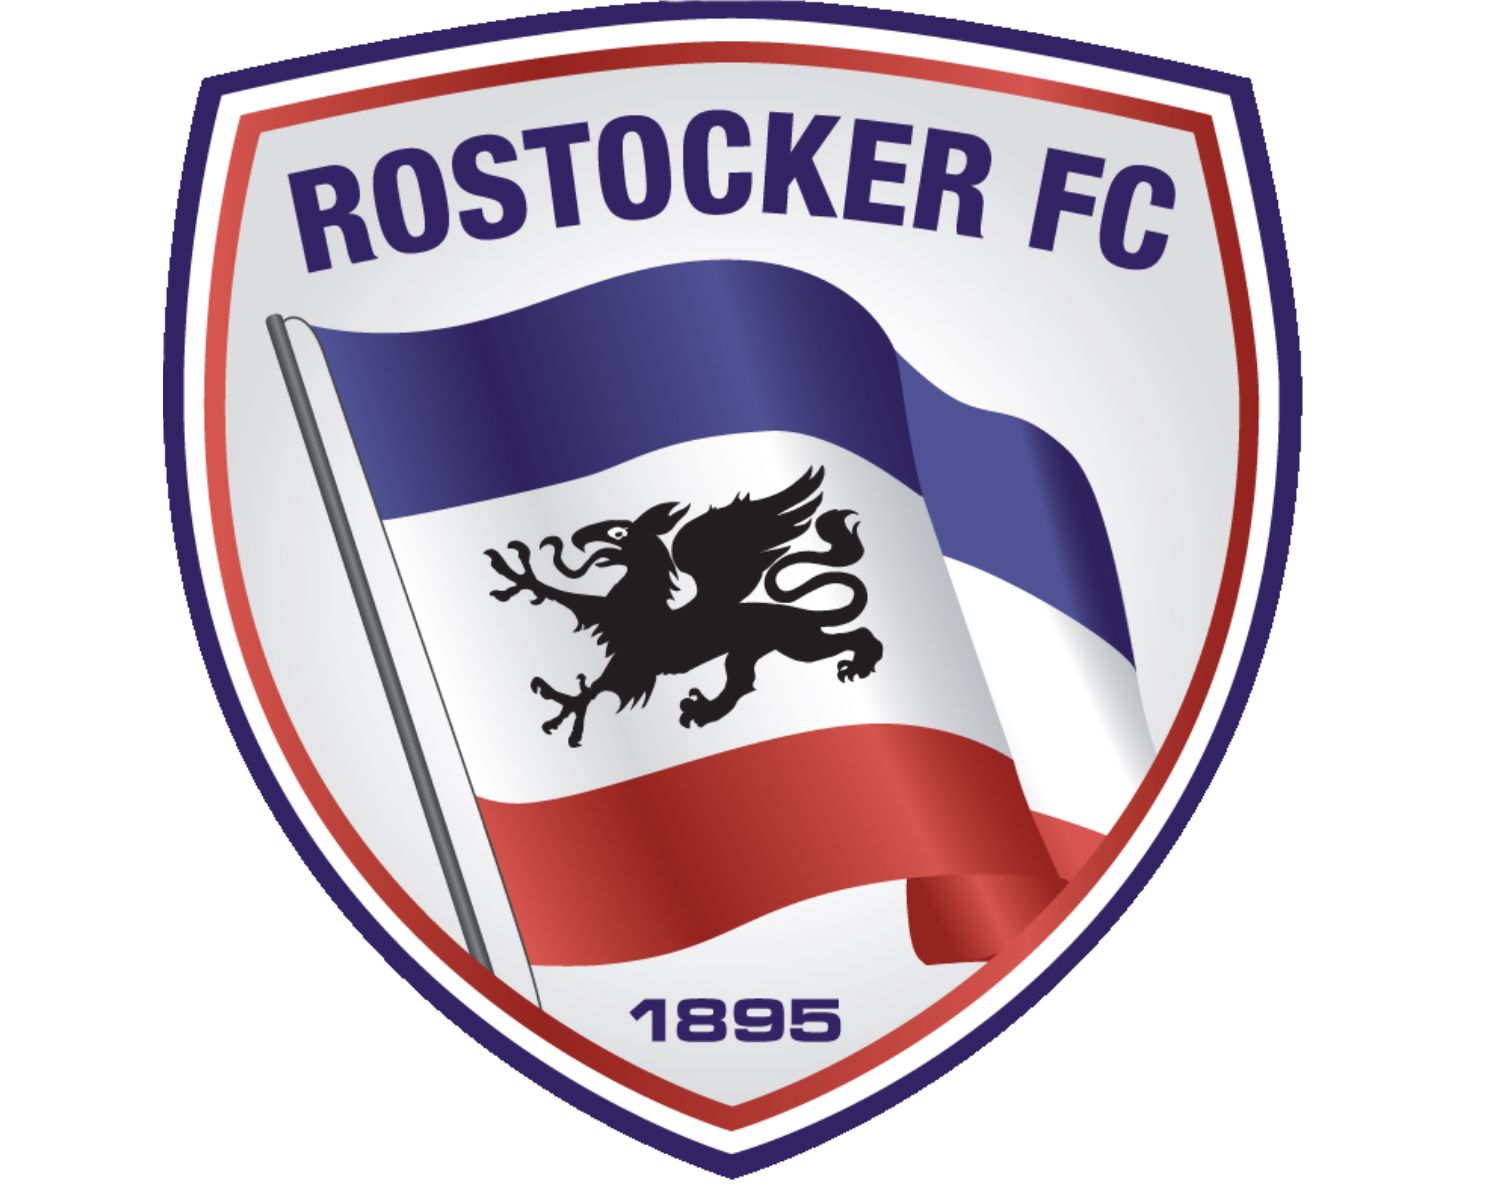 rostocker-fc-1895-17-football-club-facts